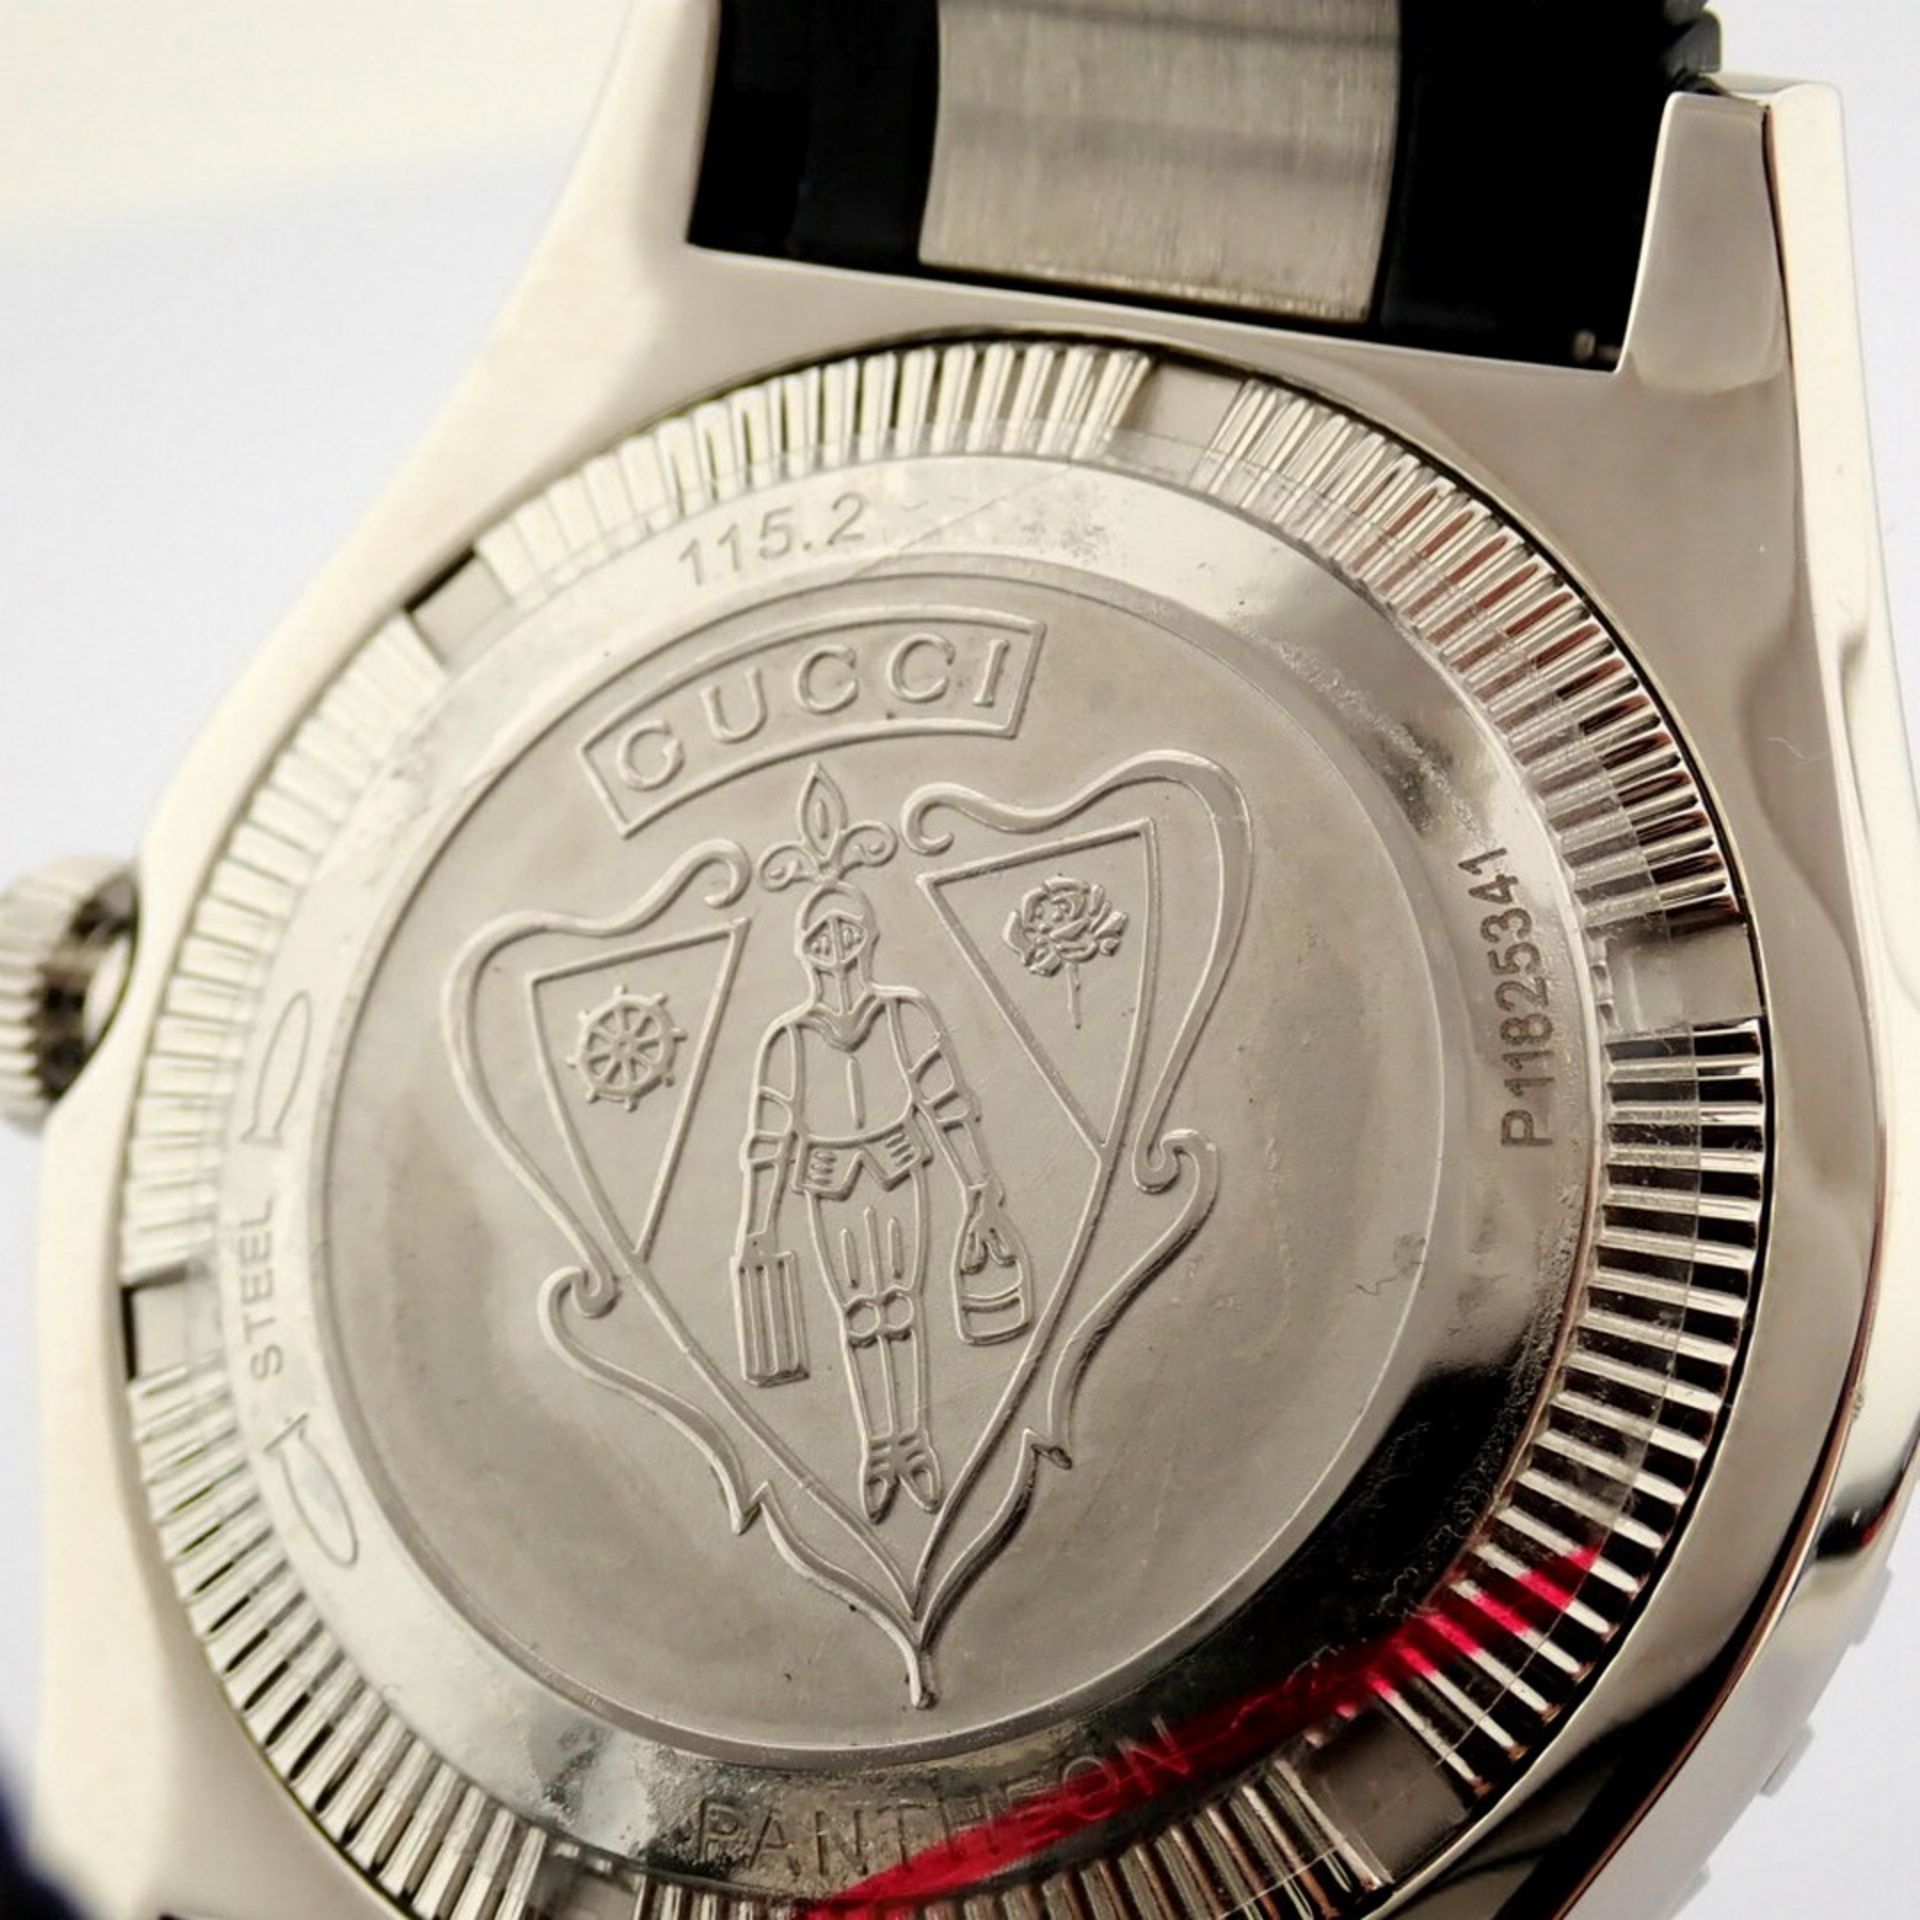 Gucci / Pantheon 115.2 (Brand New) - Gentlmen's Steel Wrist Watch - Image 12 of 13